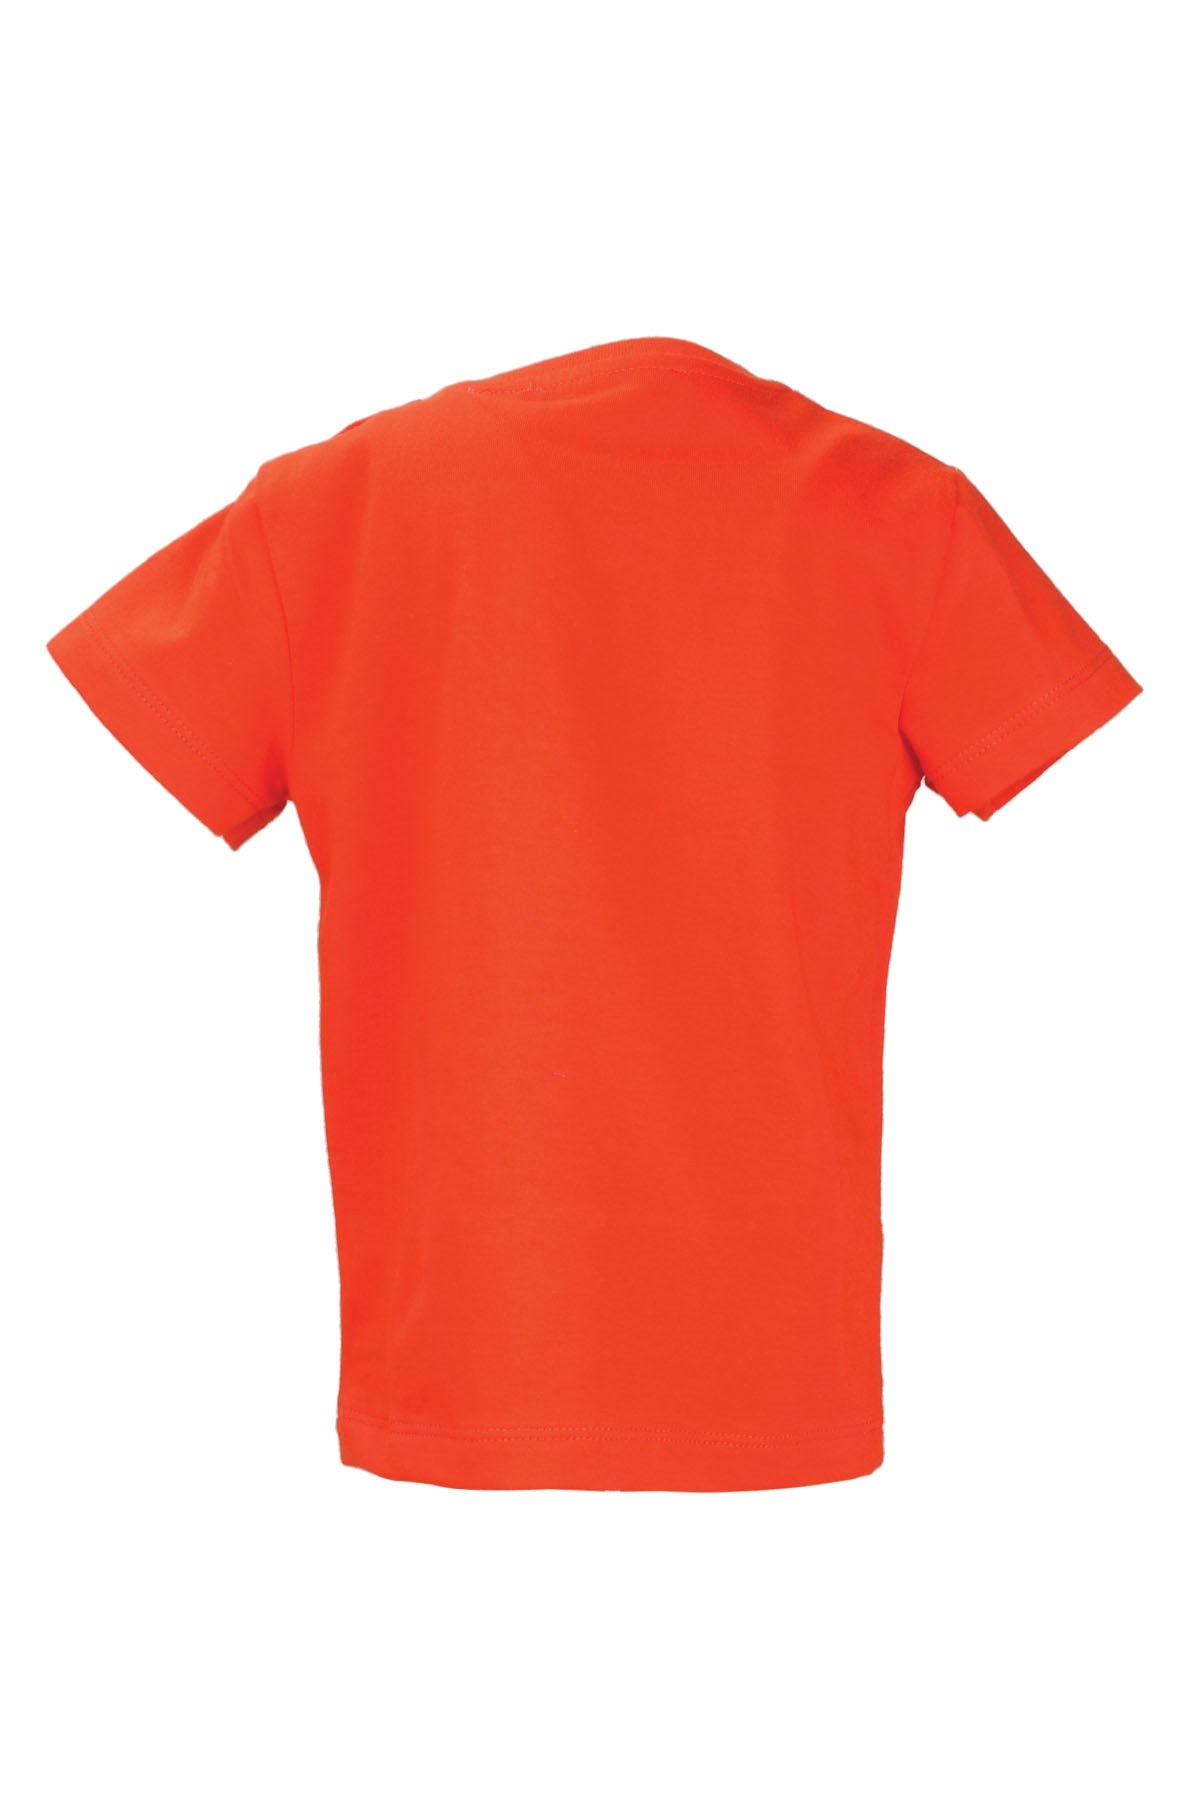 Erkek Bebek Kırmızı Ahtapot Baskılı T-Shirt (9ay-4yaş)-2